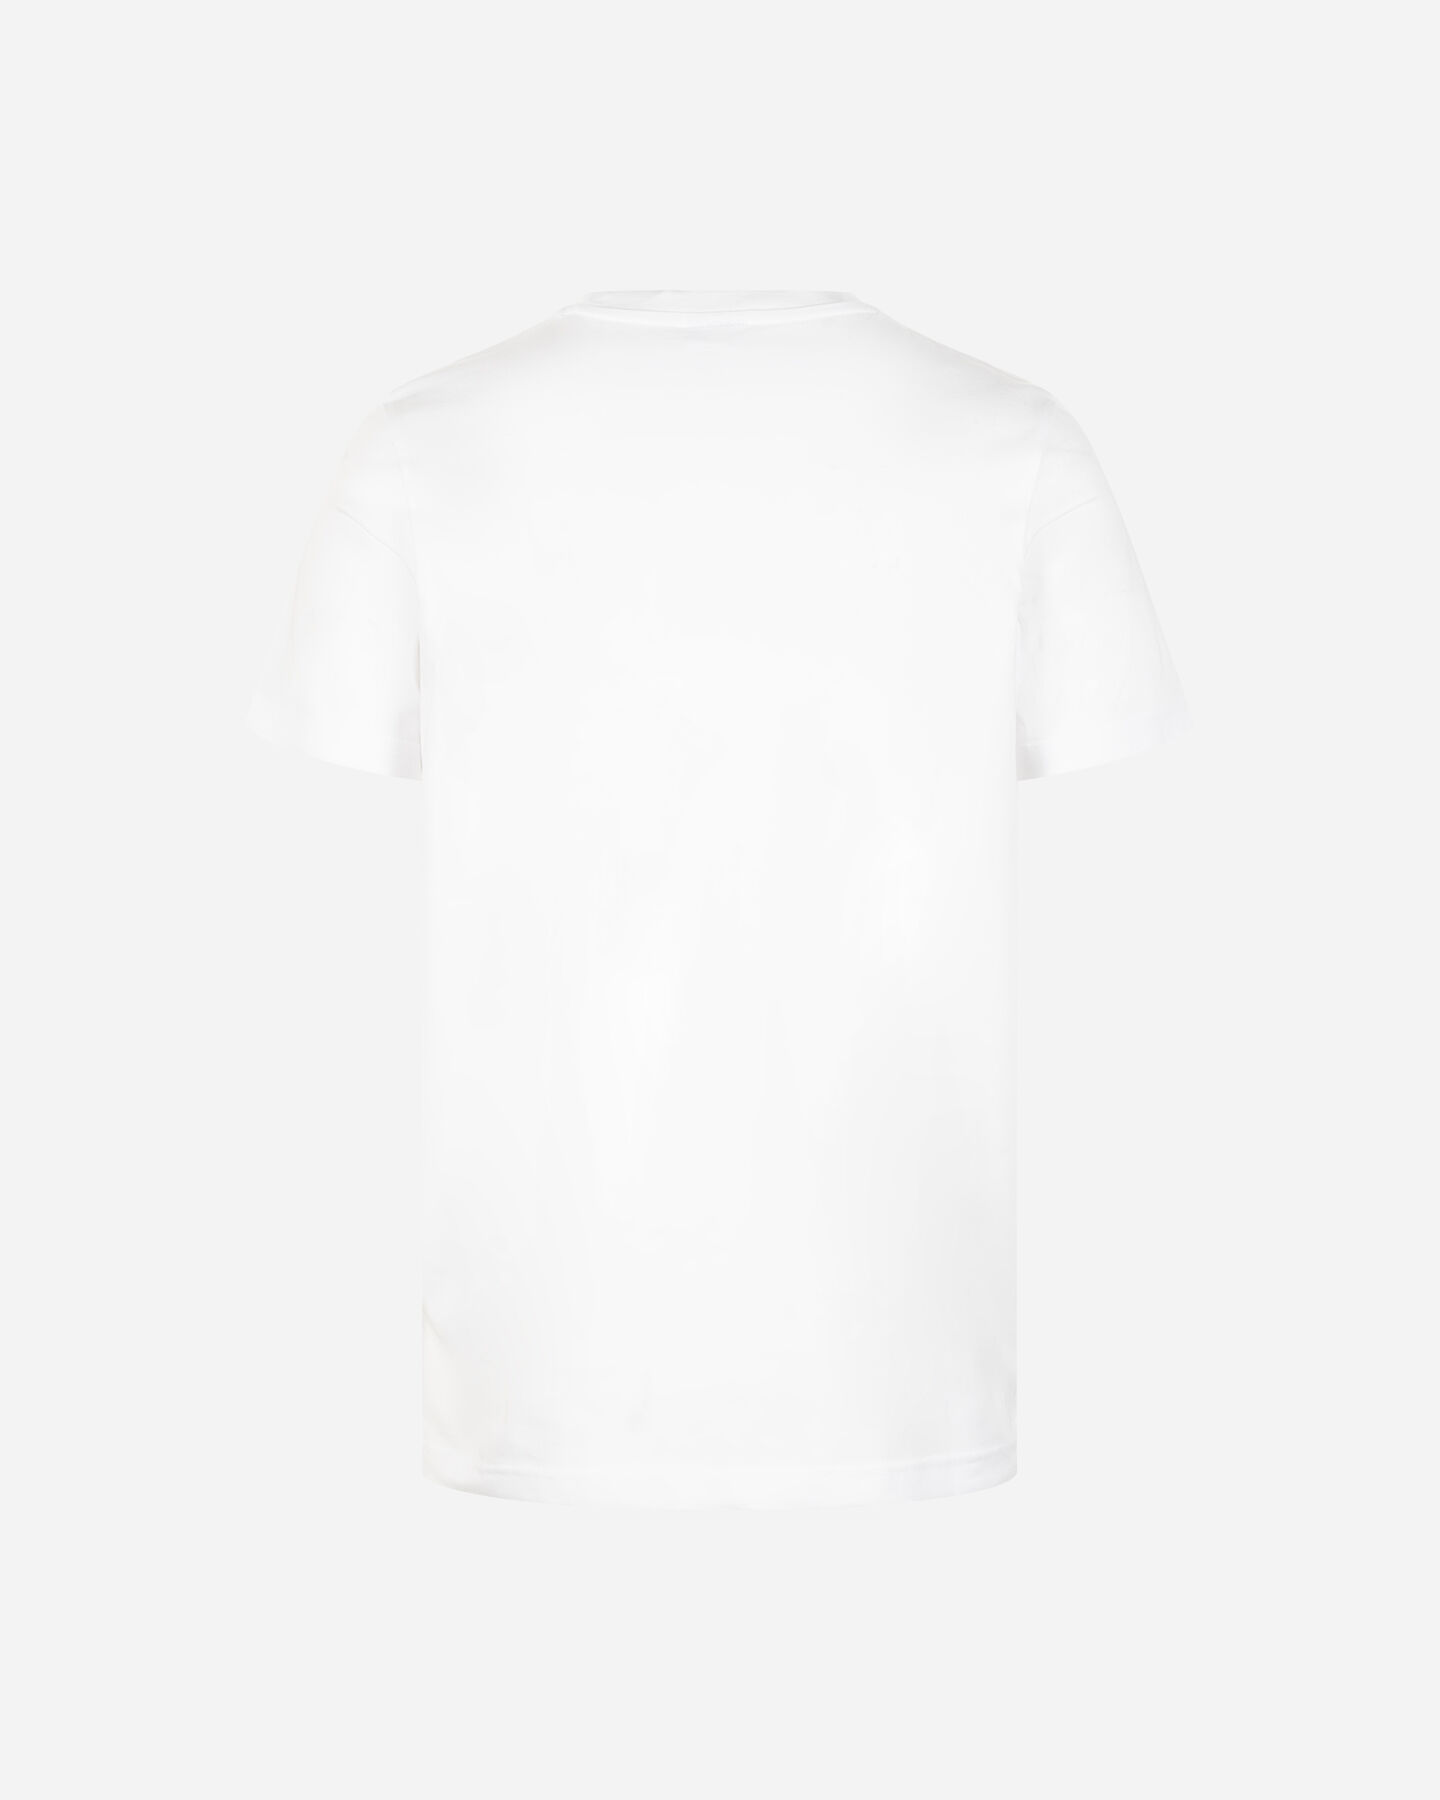  T-Shirt PUMA BRAND LOVE LOGO M S5673847|02|XS scatto 1